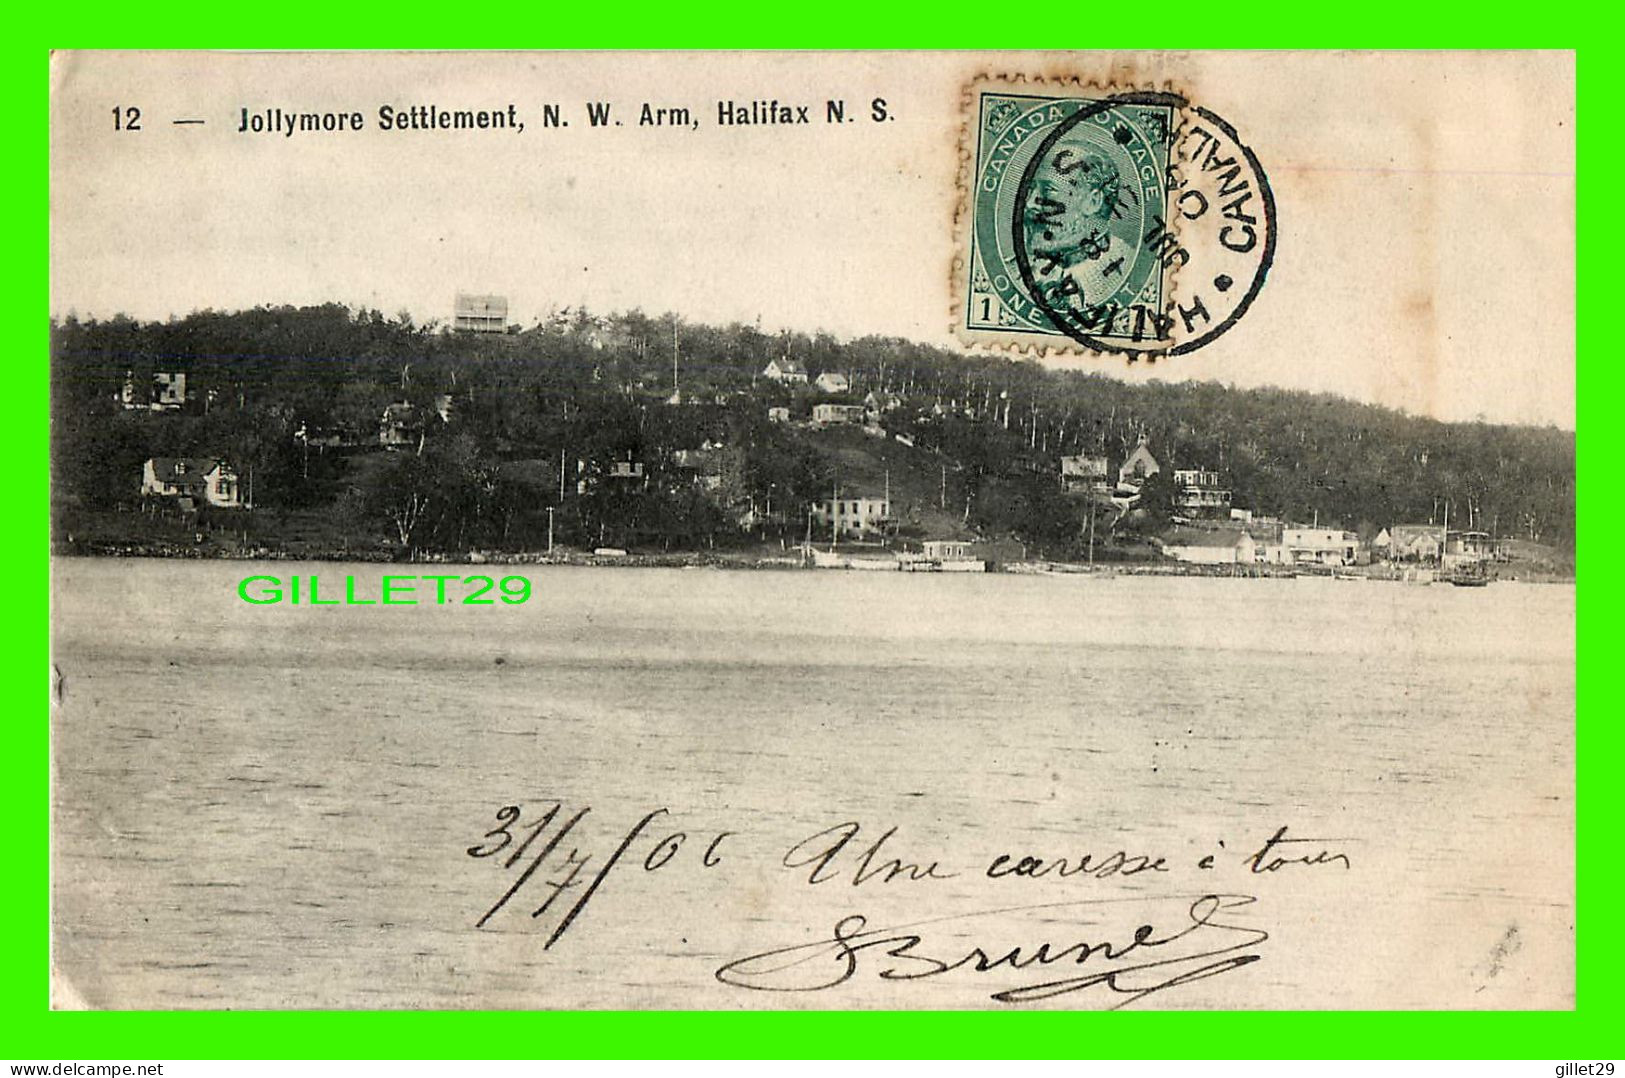 HALIFAX, NOVA SCOTIA - JOLLYMORE SETTLEMENT, N. W. ARM - TRAVEL IN 1906 - W.E. HEBB PUBLISHER - - Halifax